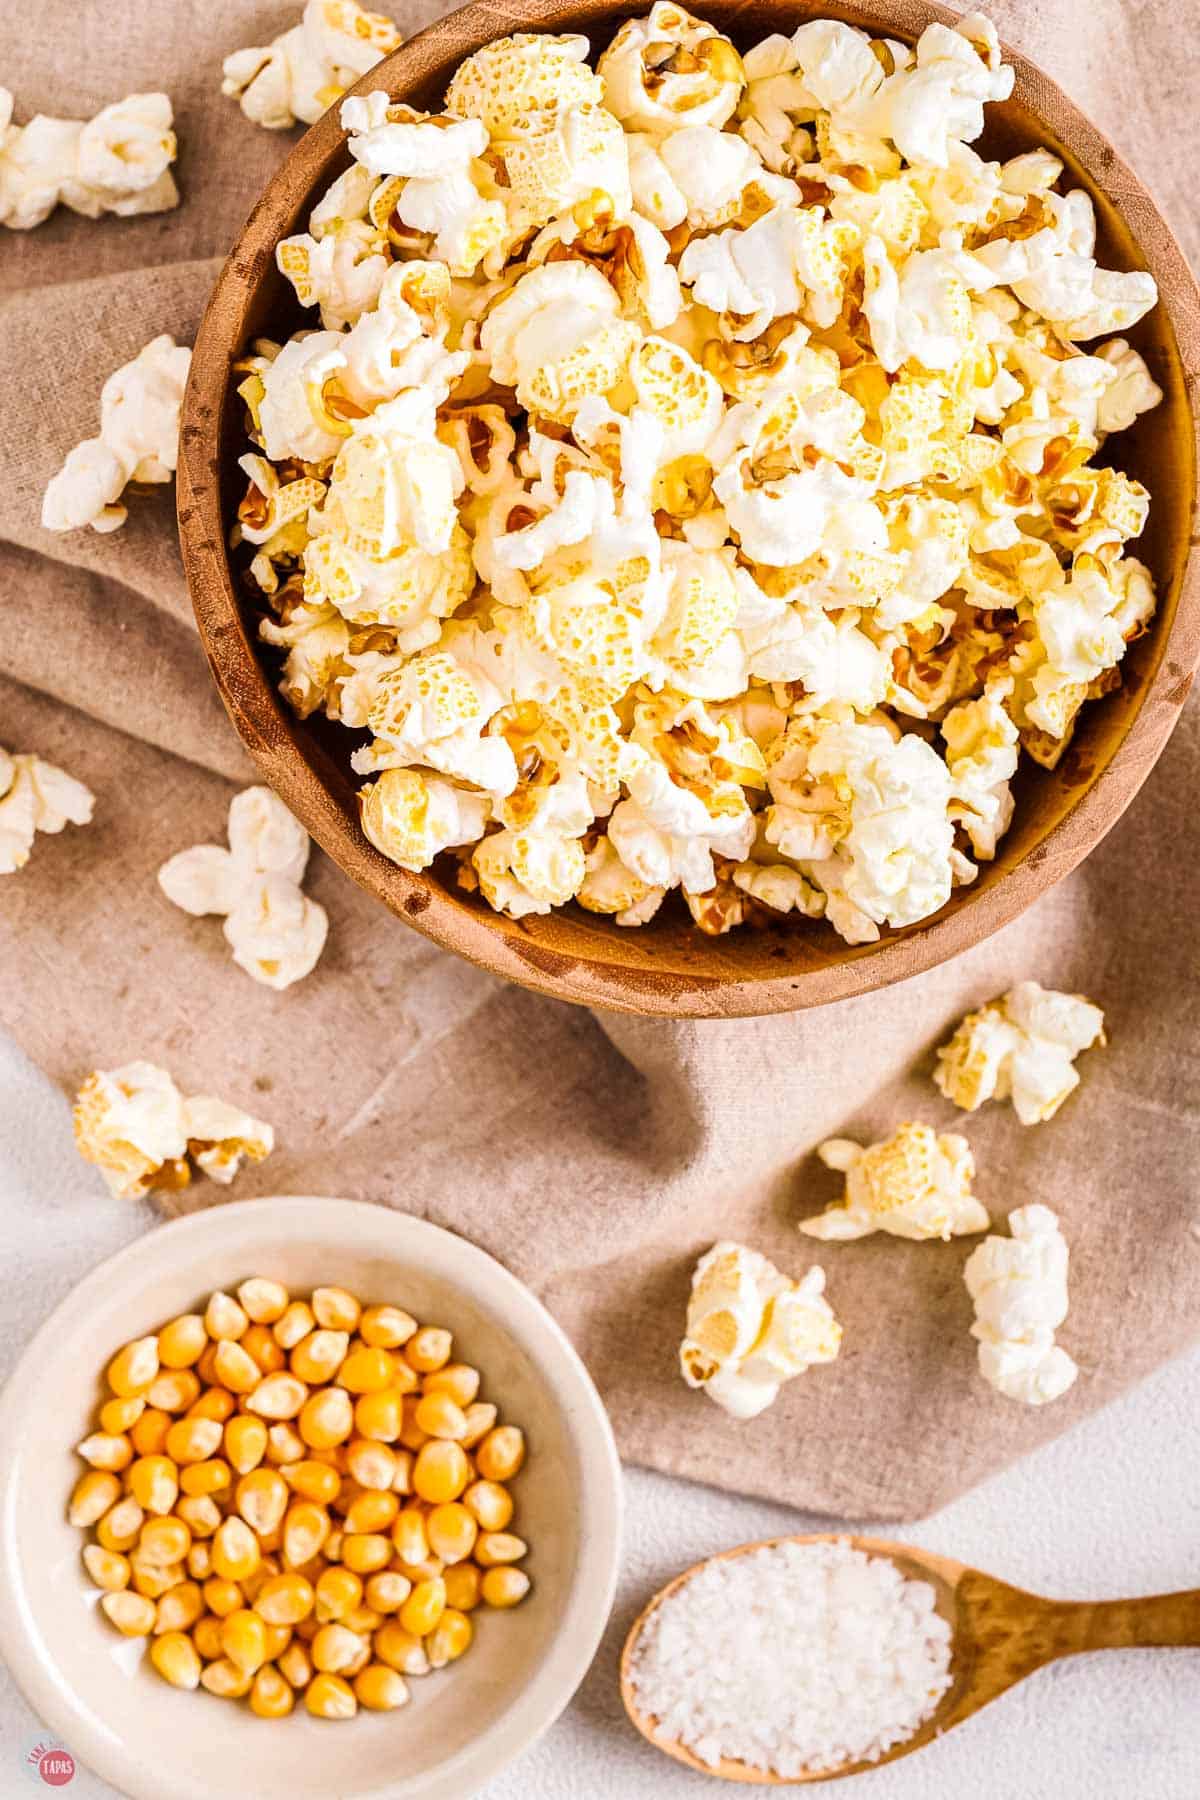 salt and vinegar popcorn in a wood bowl